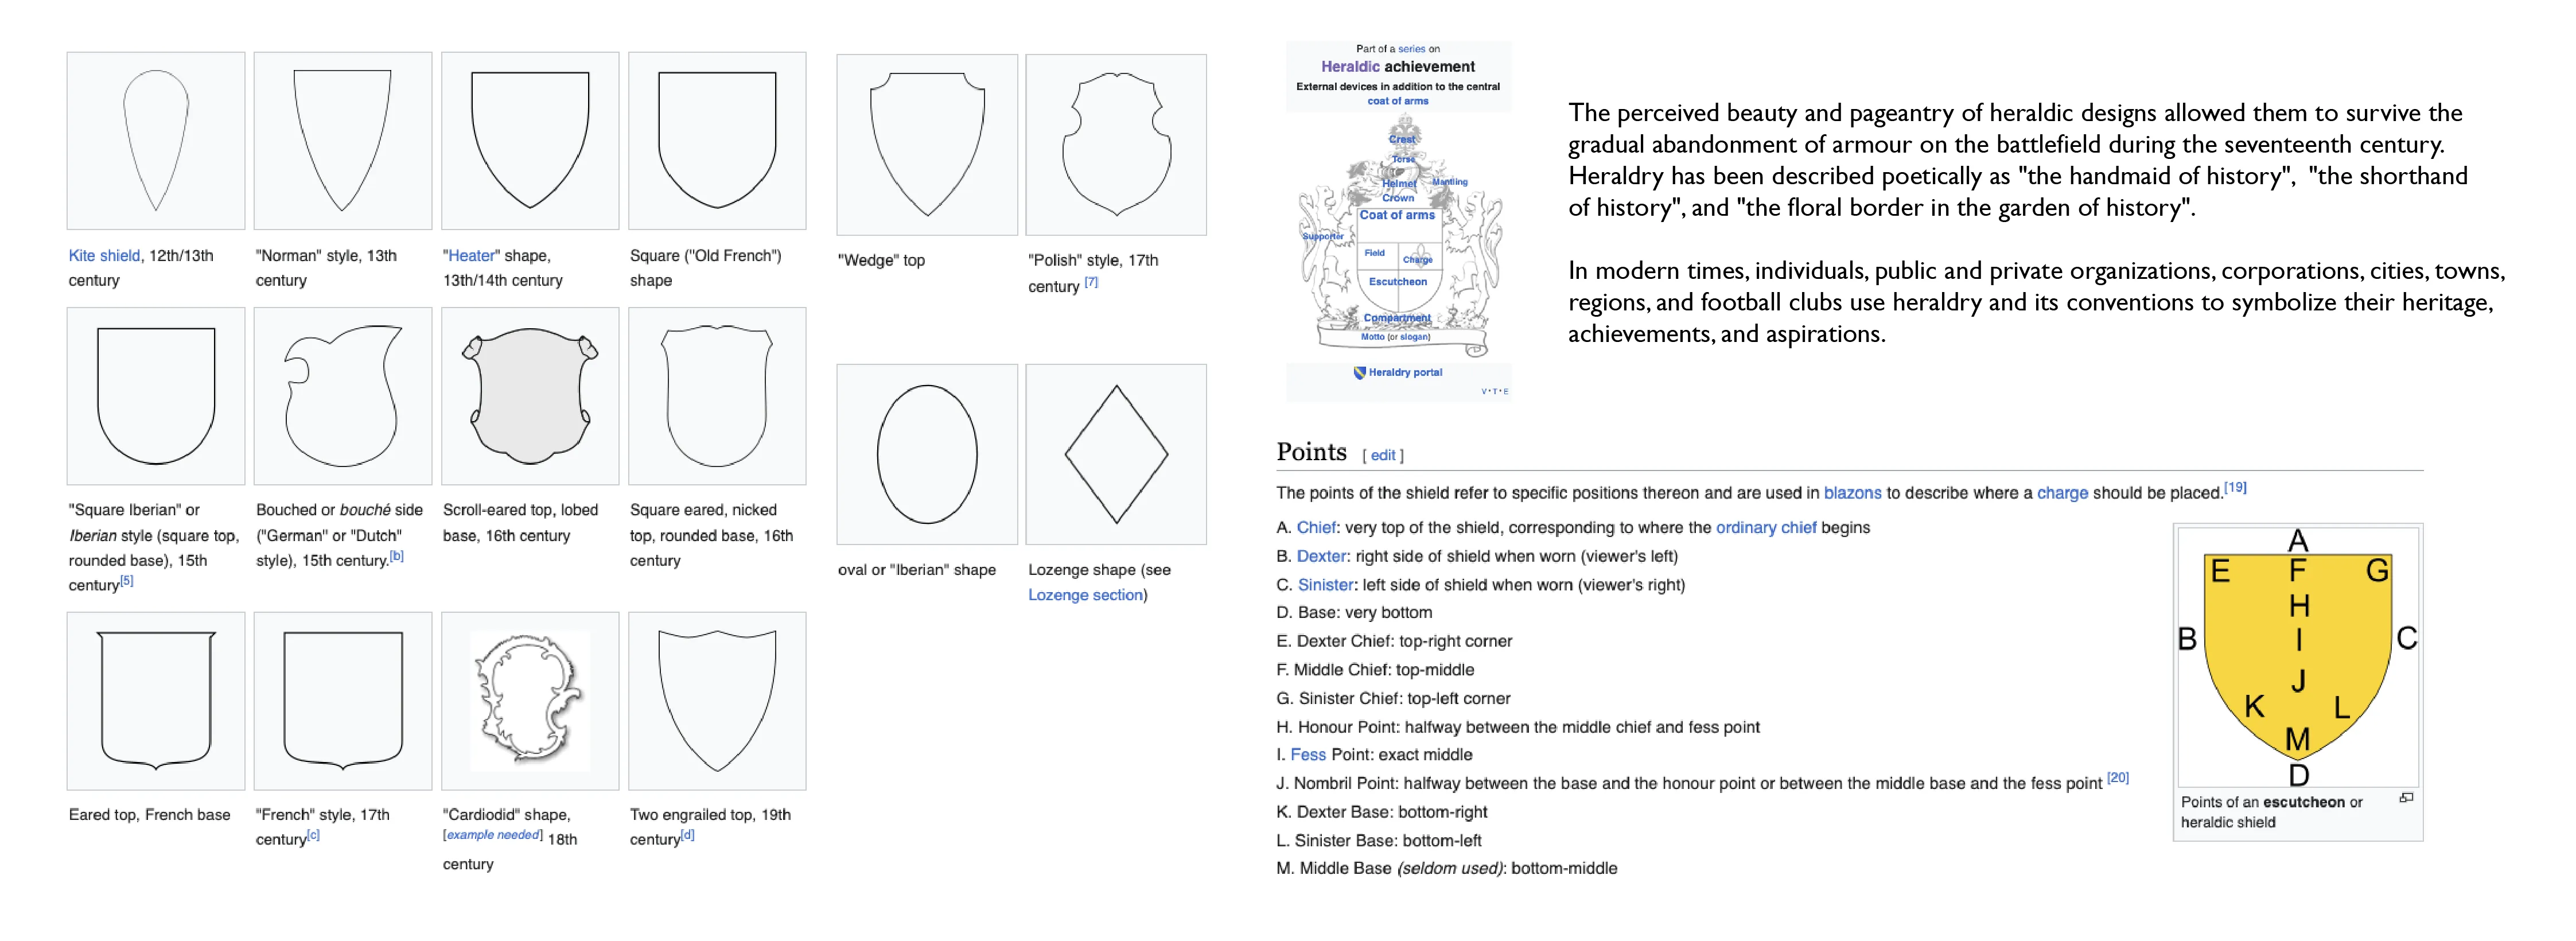 Wikipedia | Examining Heraldry